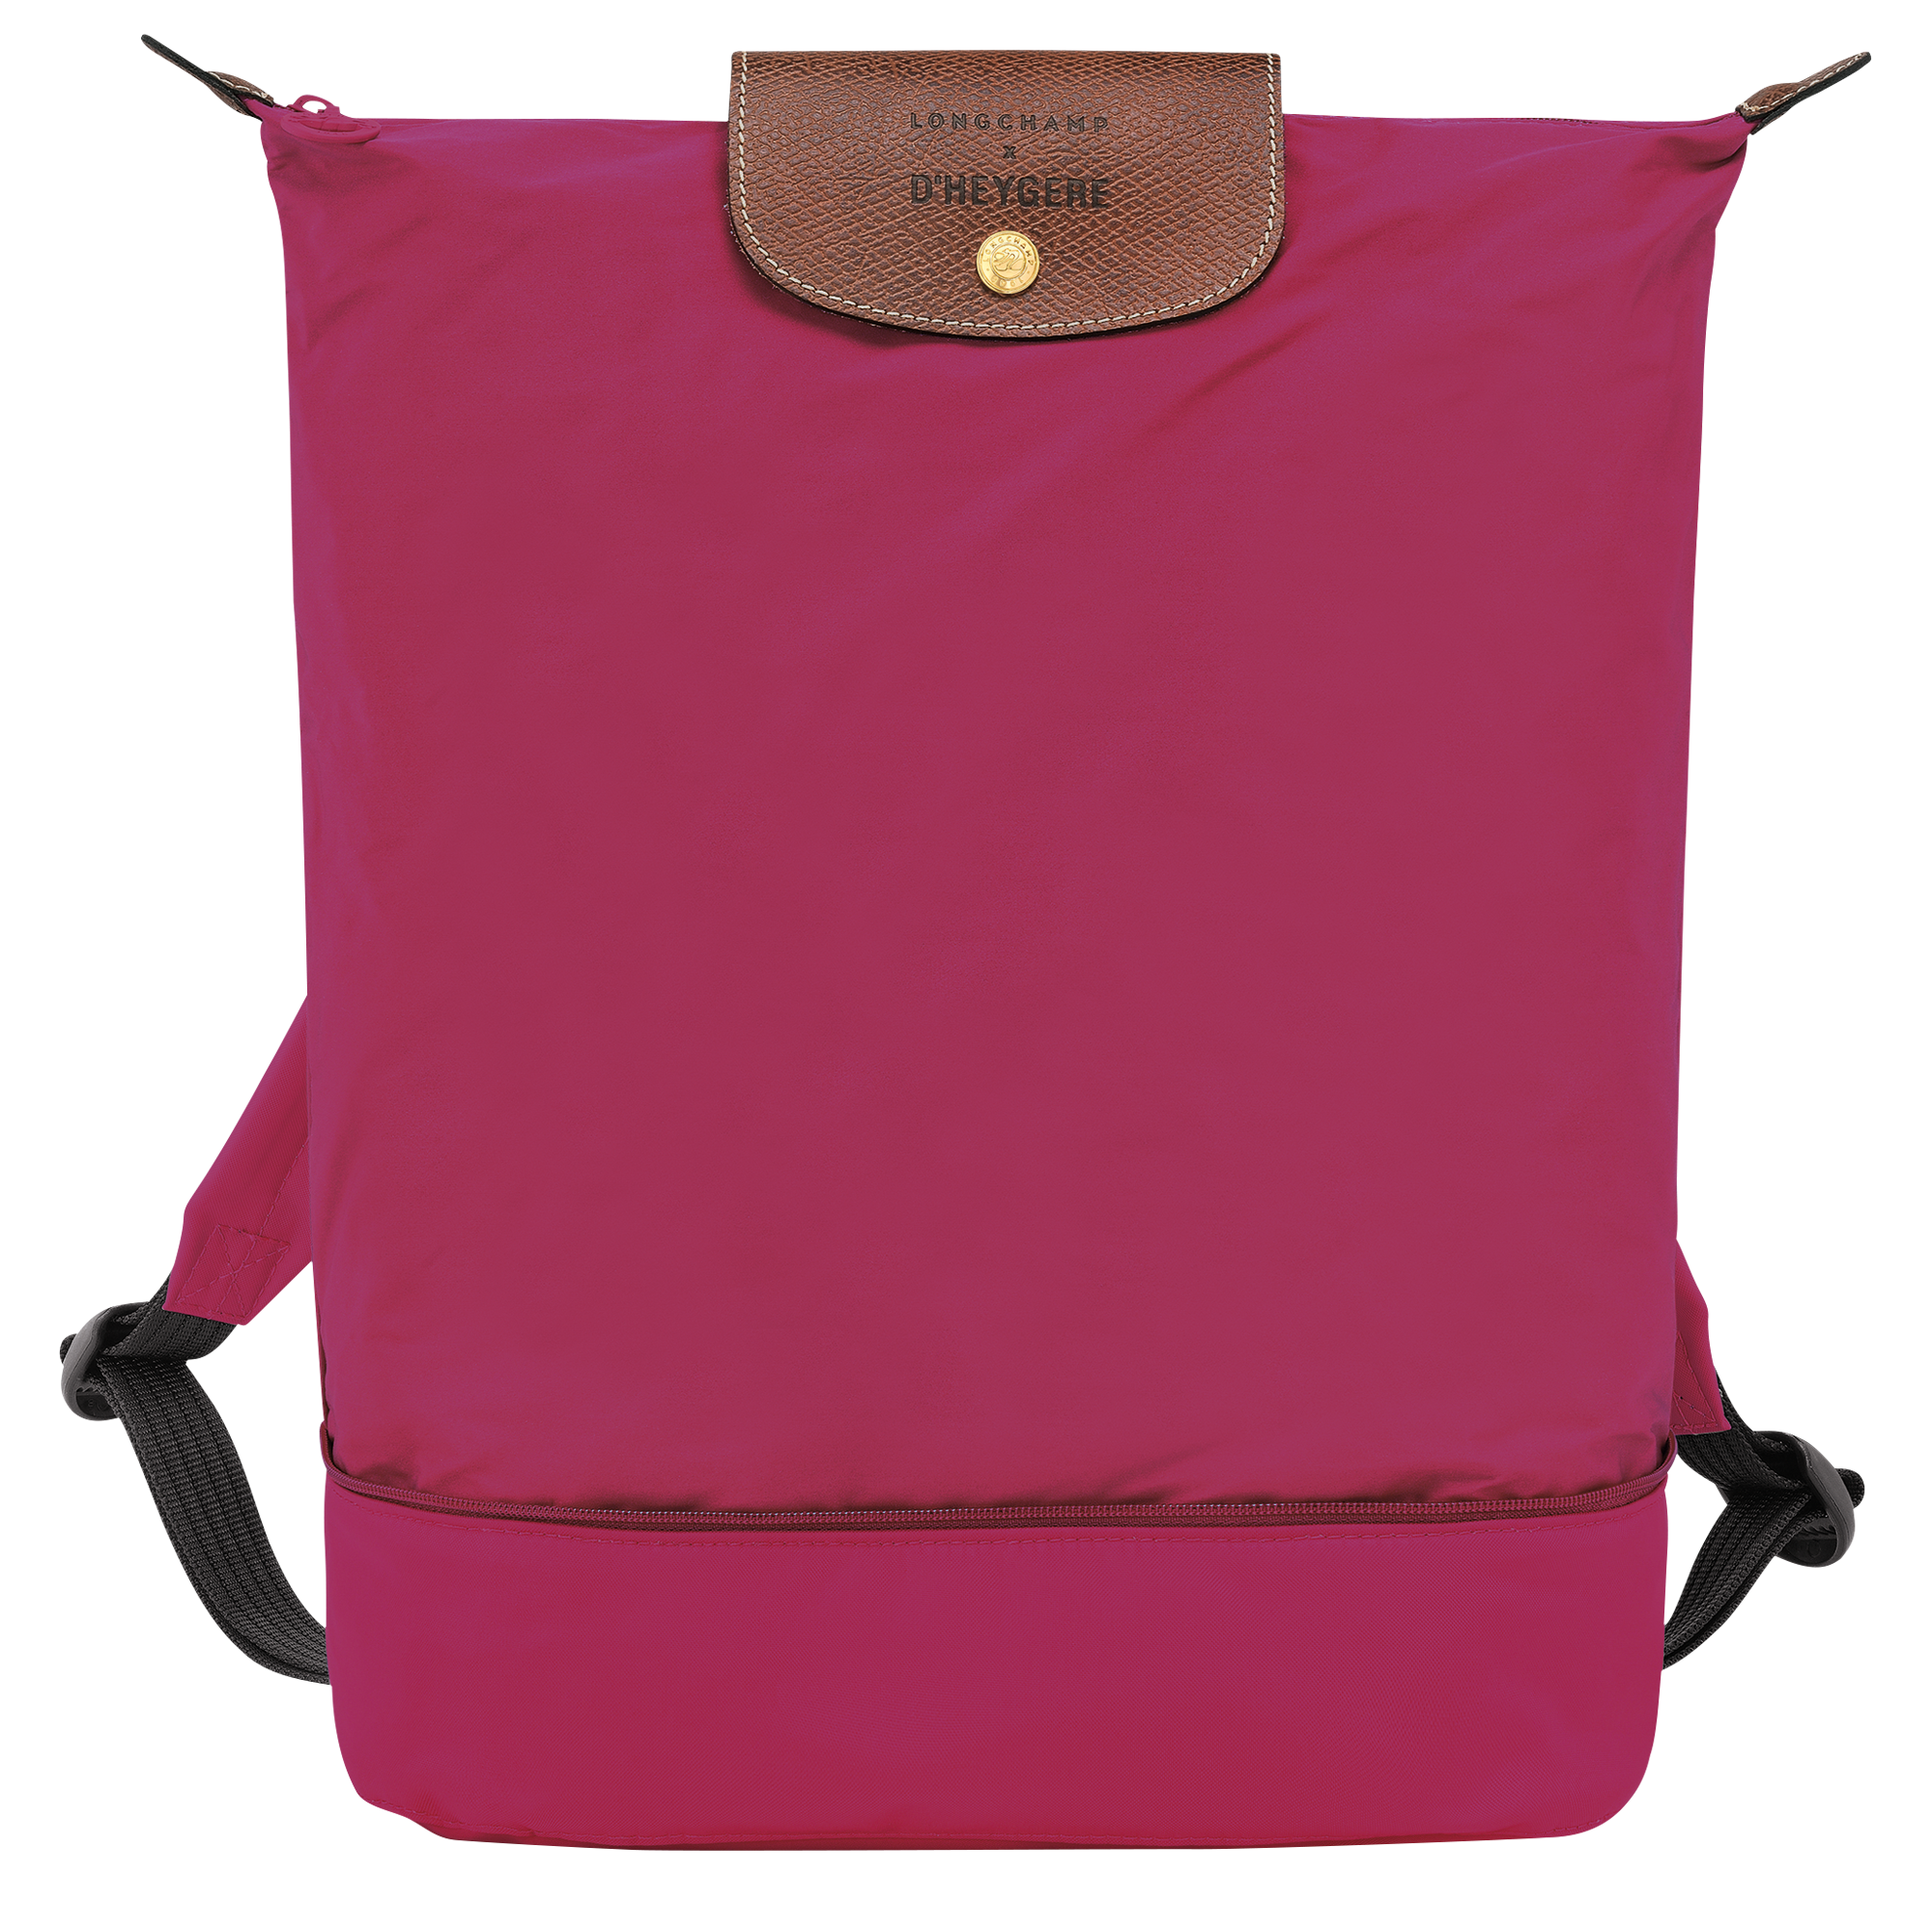 Longchamp X D_heygere pink crossbody bag-backpack Php 25,500 (2).png